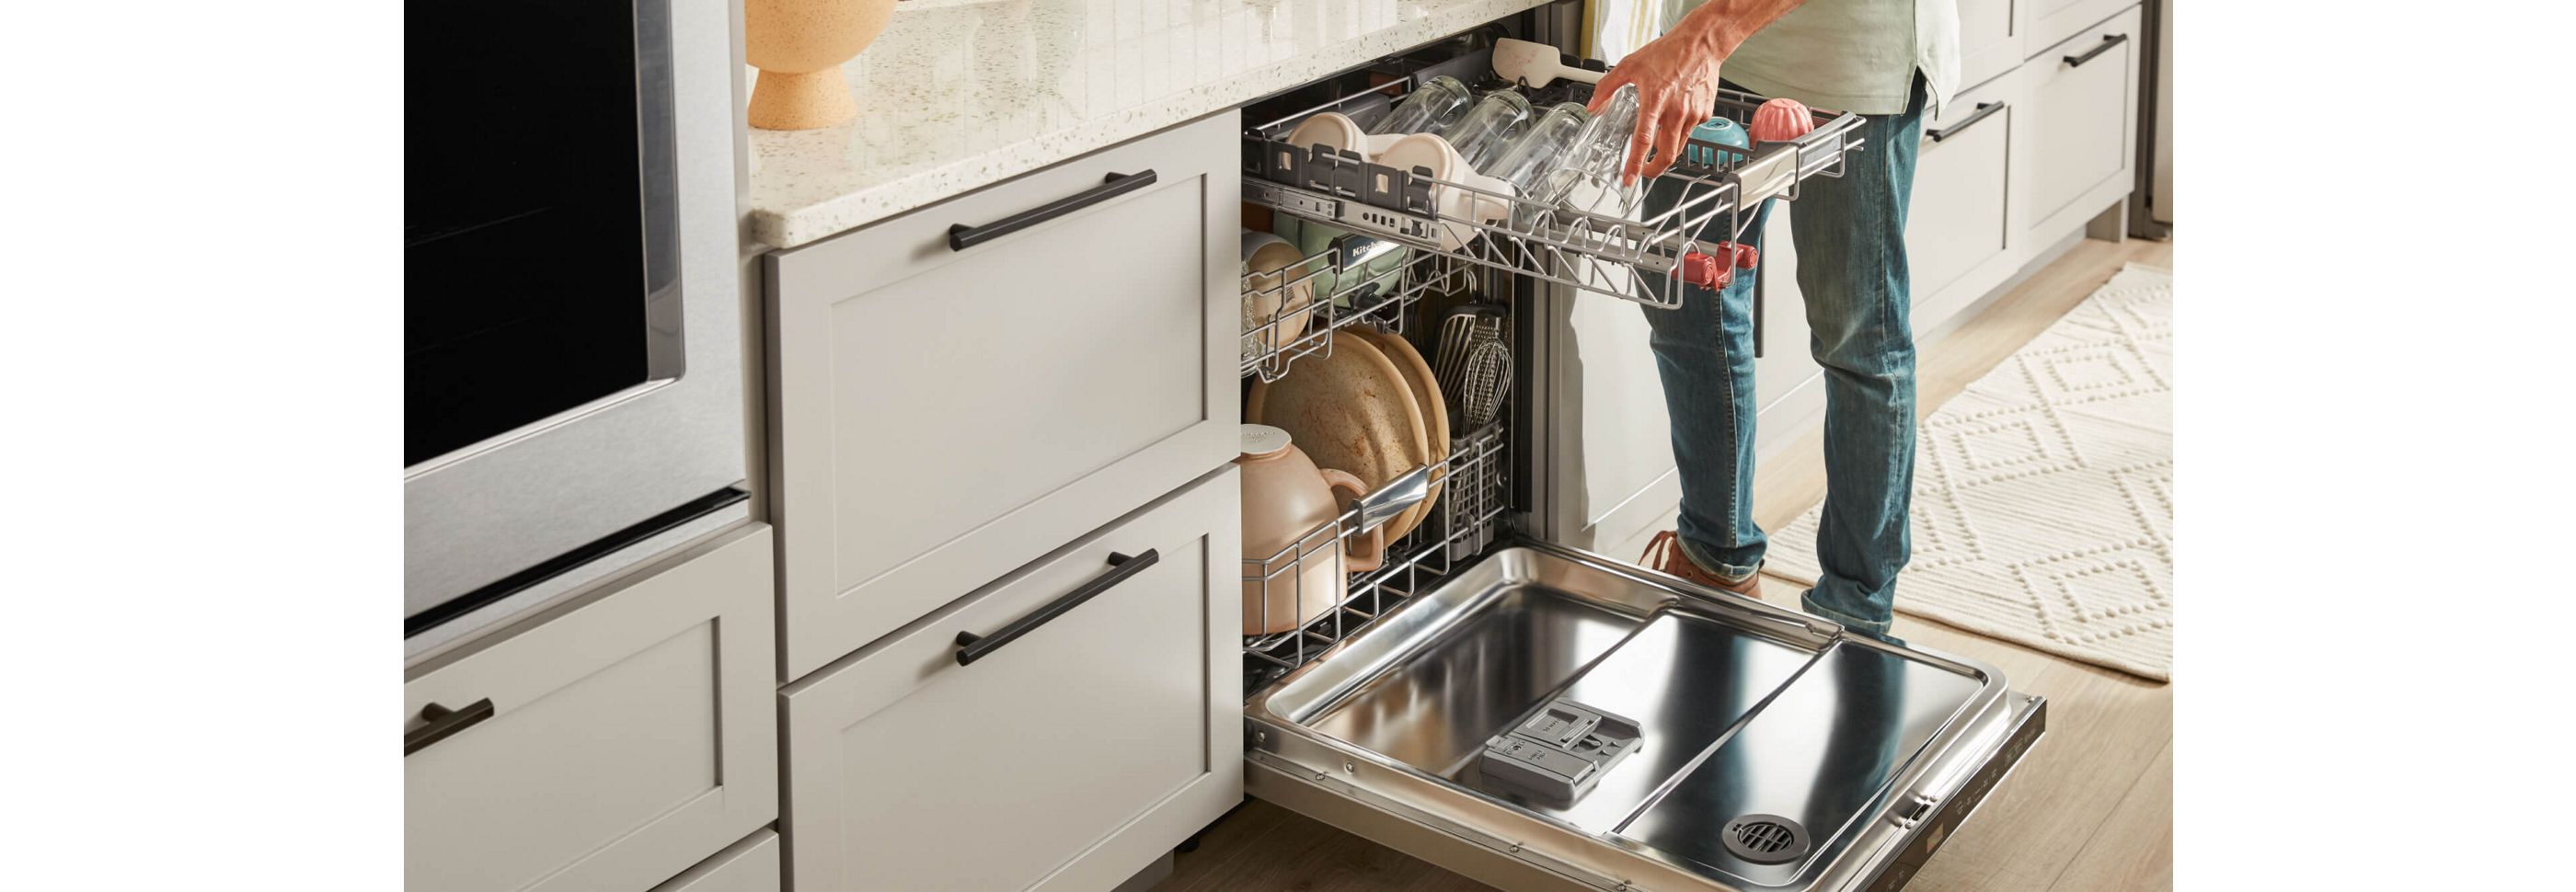 New KitchenAid Dishwashers to Provide More Room, Flexibility